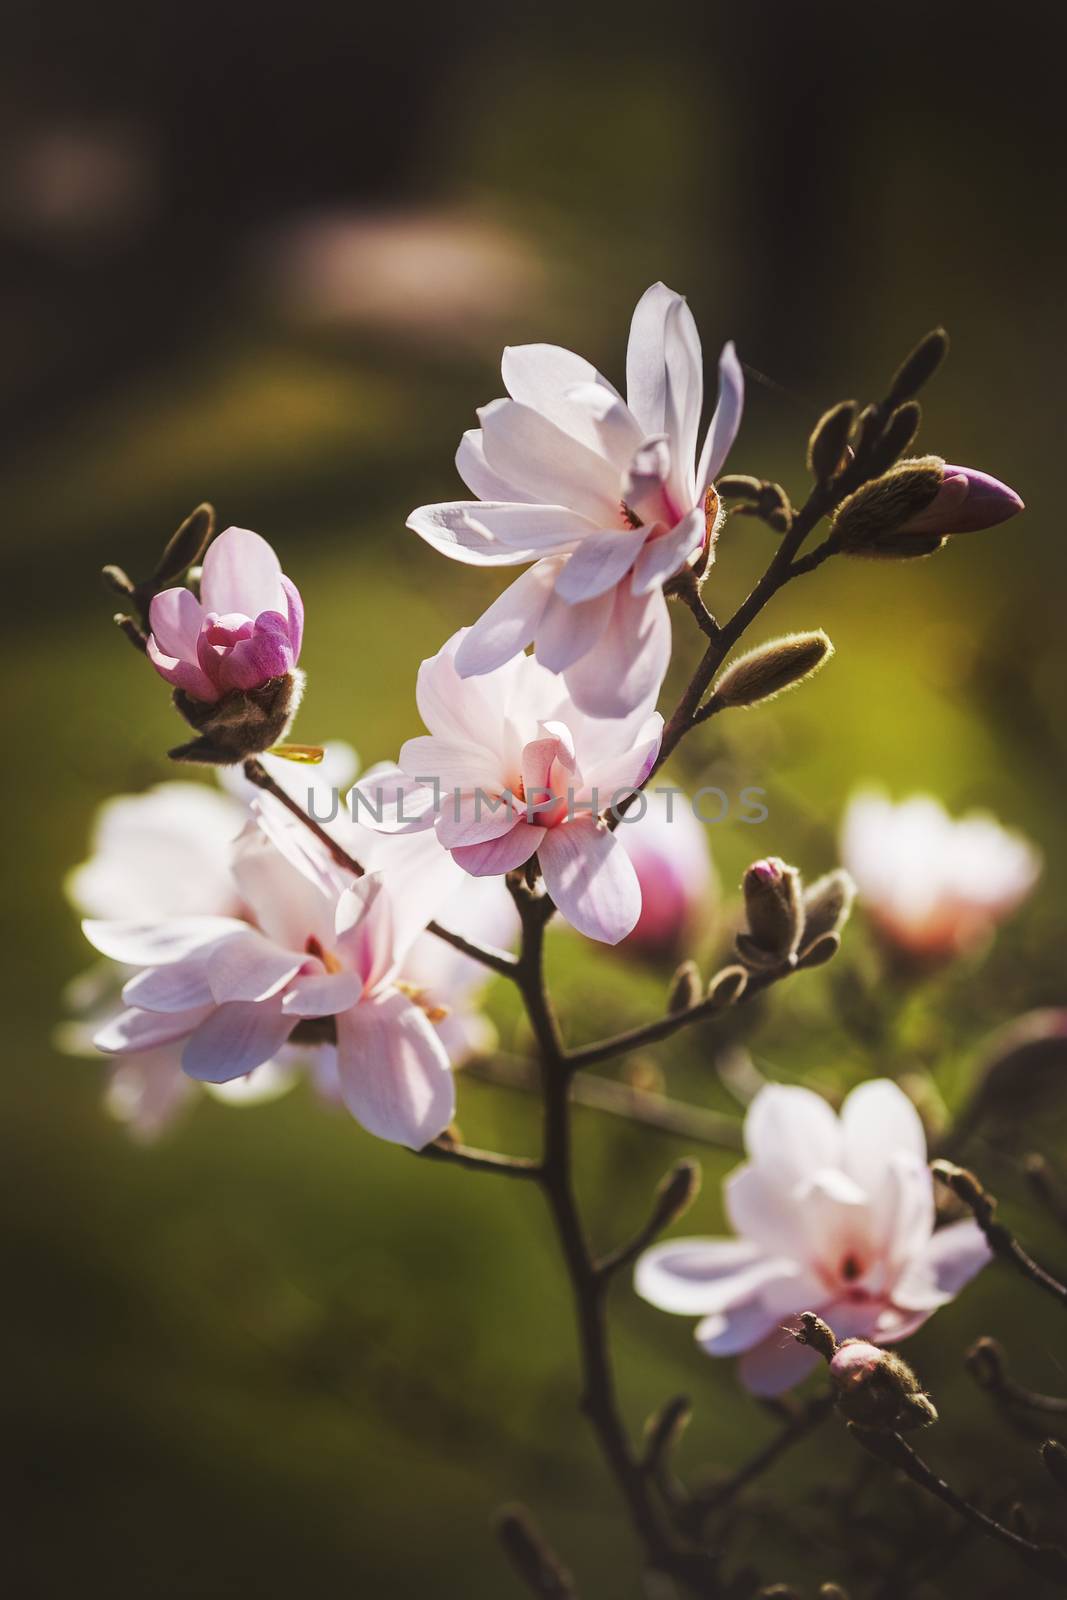 magnolia flower in the park on dark background by zhu_zhu